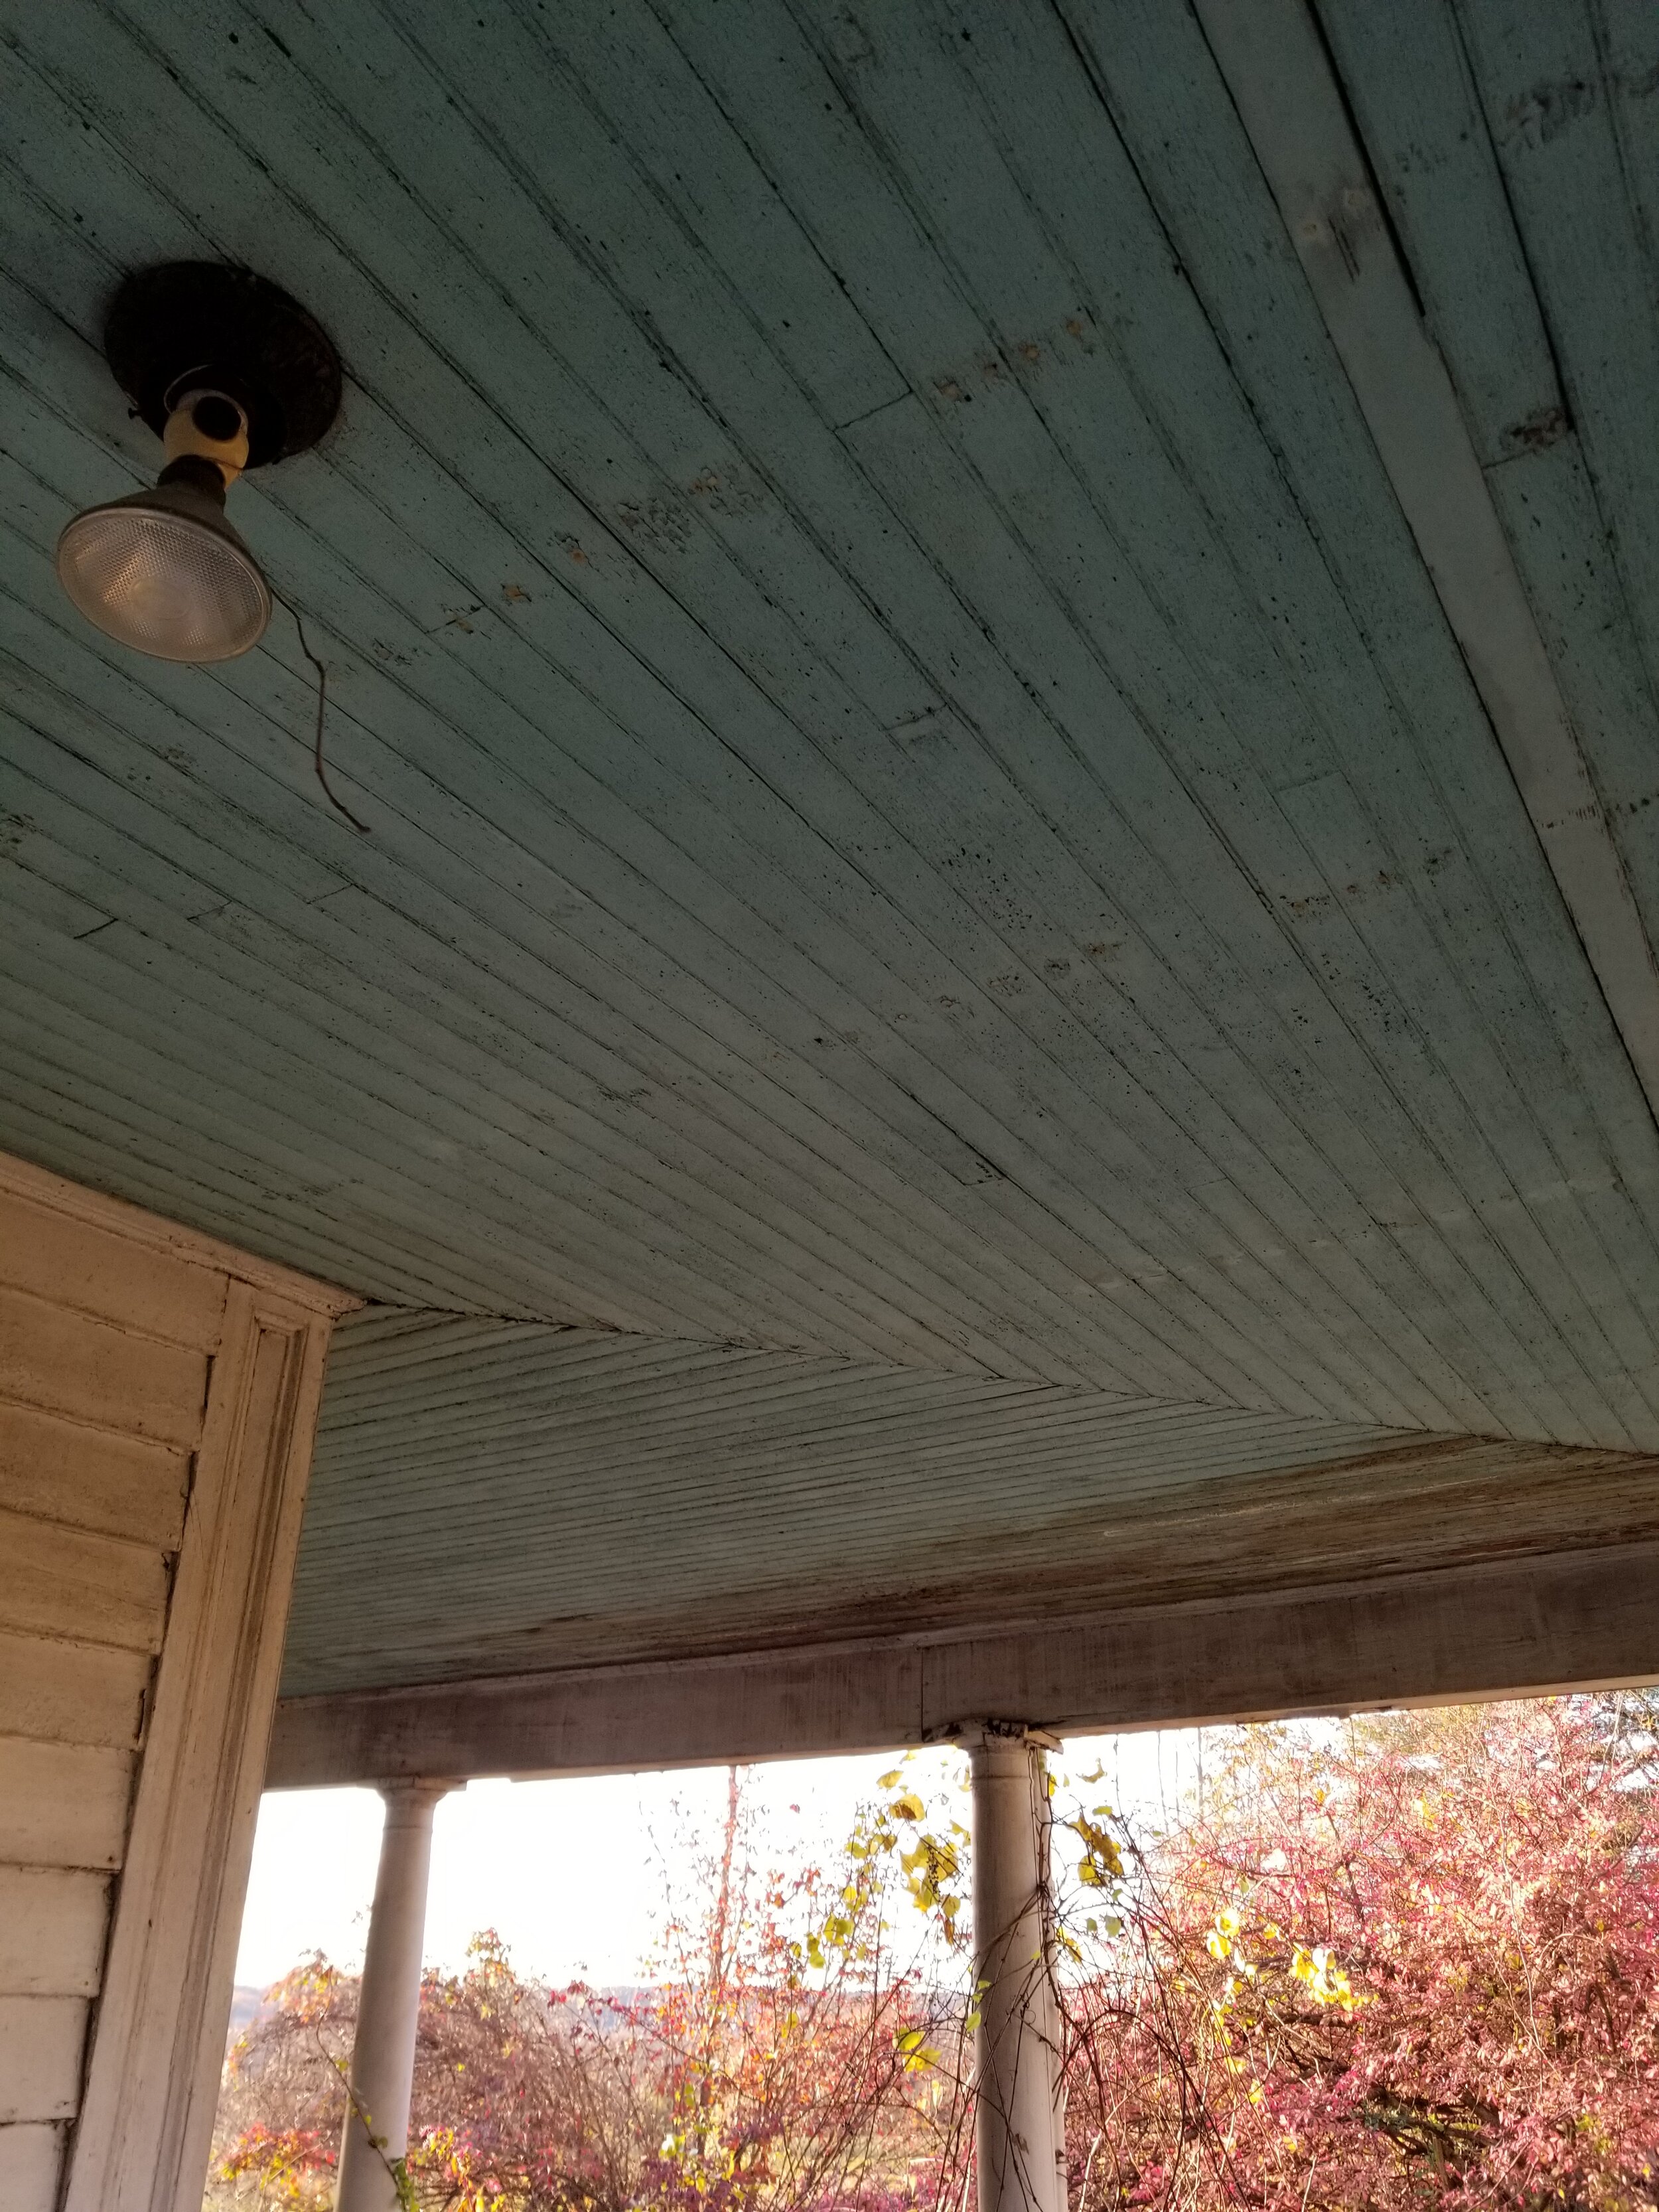 Haint blue porch ceiling